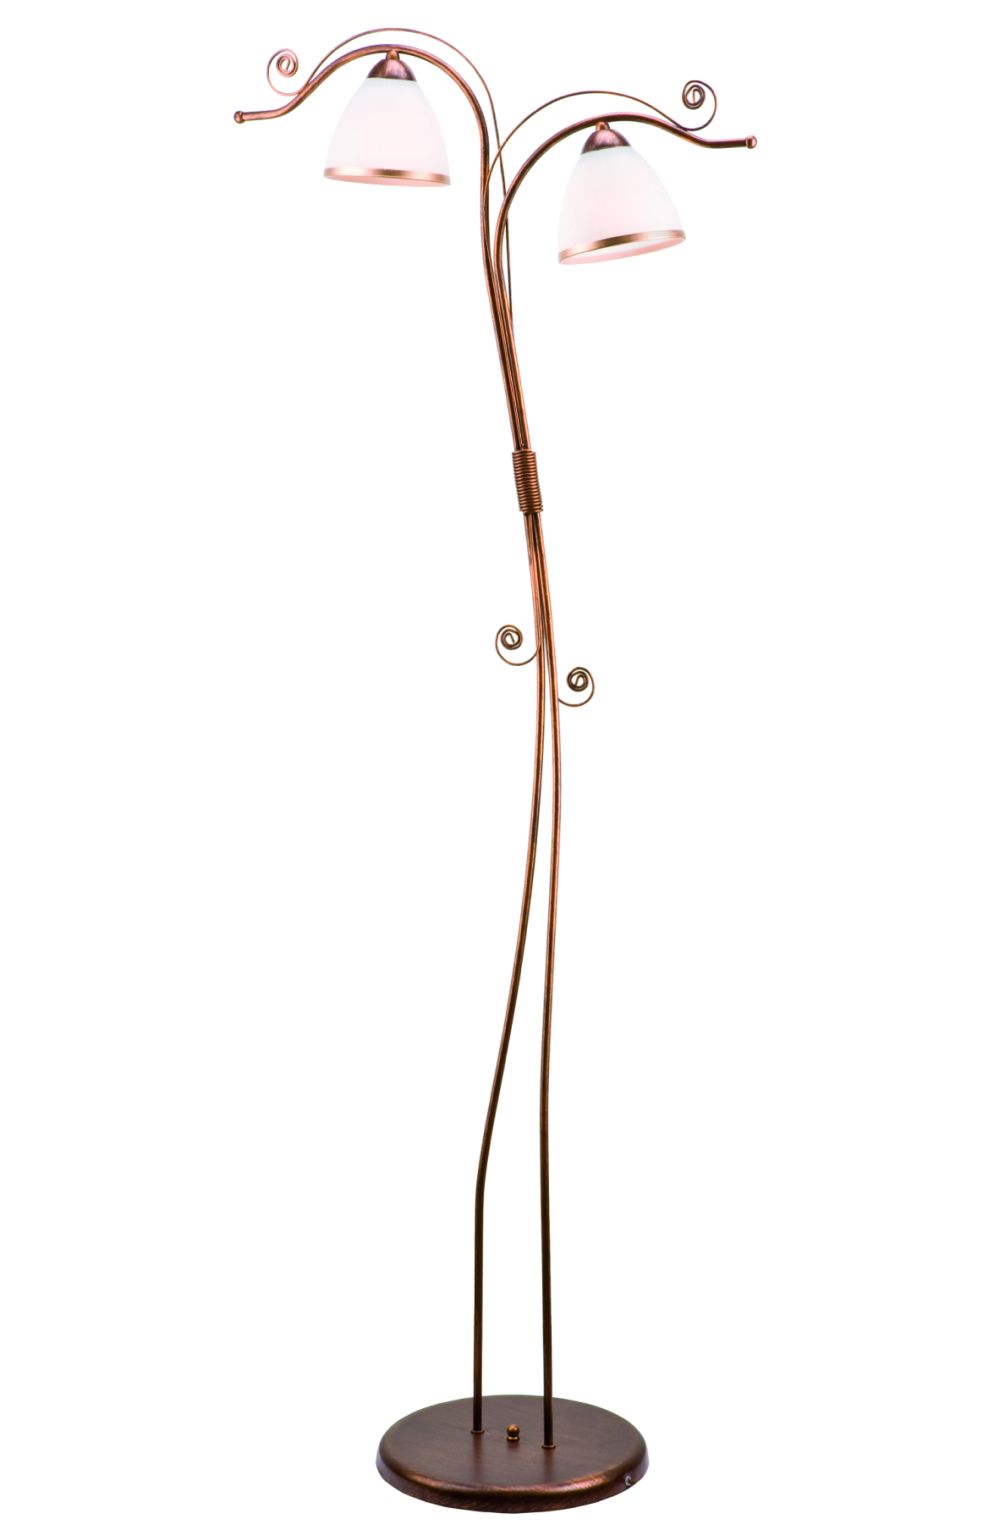 Stehlampe Glasschirm Shabby Braun Jugendstil 158cm